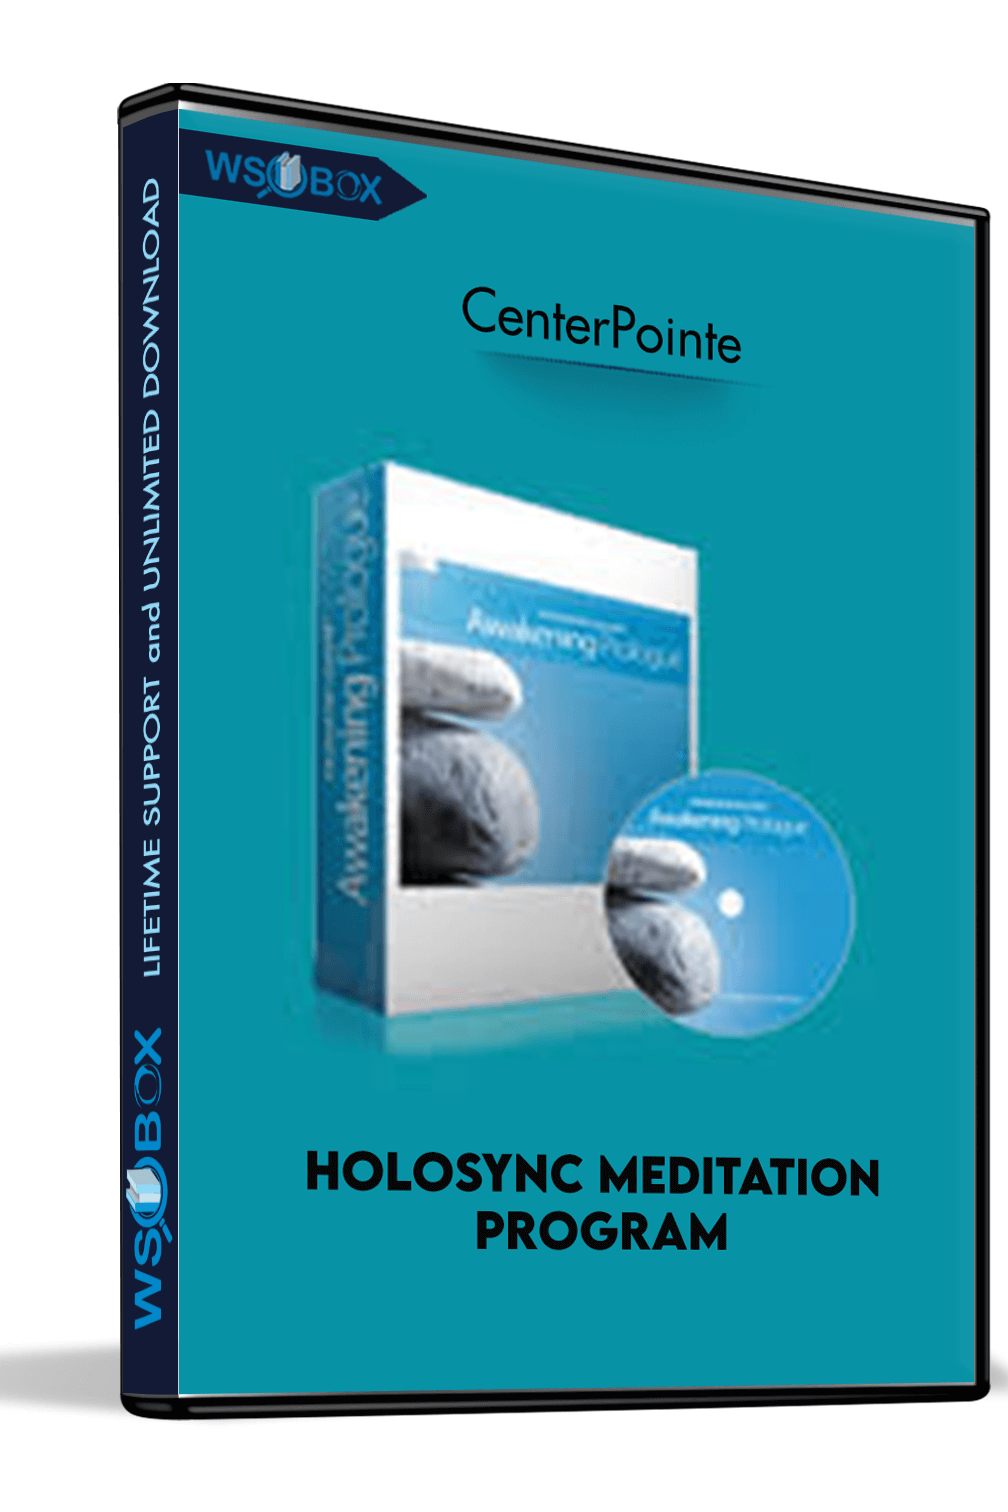 holosync-meditation-program-centerpointe